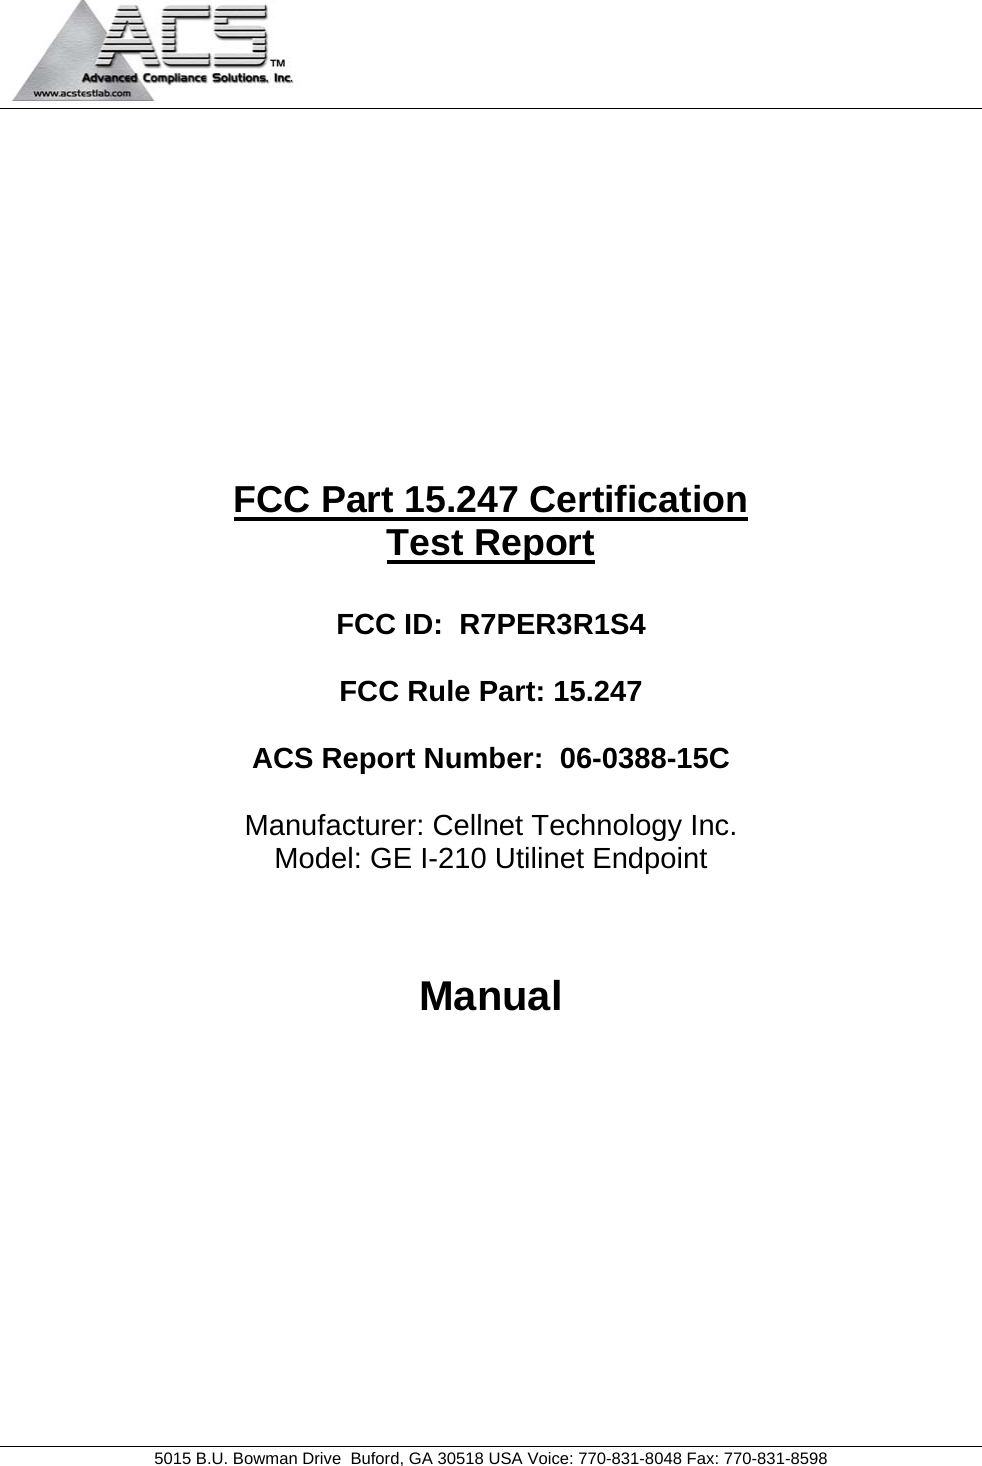   5015 B.U. Bowman Drive  Buford, GA 30518 USA Voice: 770-831-8048 Fax: 770-831-8598           FCC Part 15.247 Certification Test Report  FCC ID:  R7PER3R1S4  FCC Rule Part: 15.247  ACS Report Number:  06-0388-15C   Manufacturer: Cellnet Technology Inc. Model: GE I-210 Utilinet Endpoint   Manual 